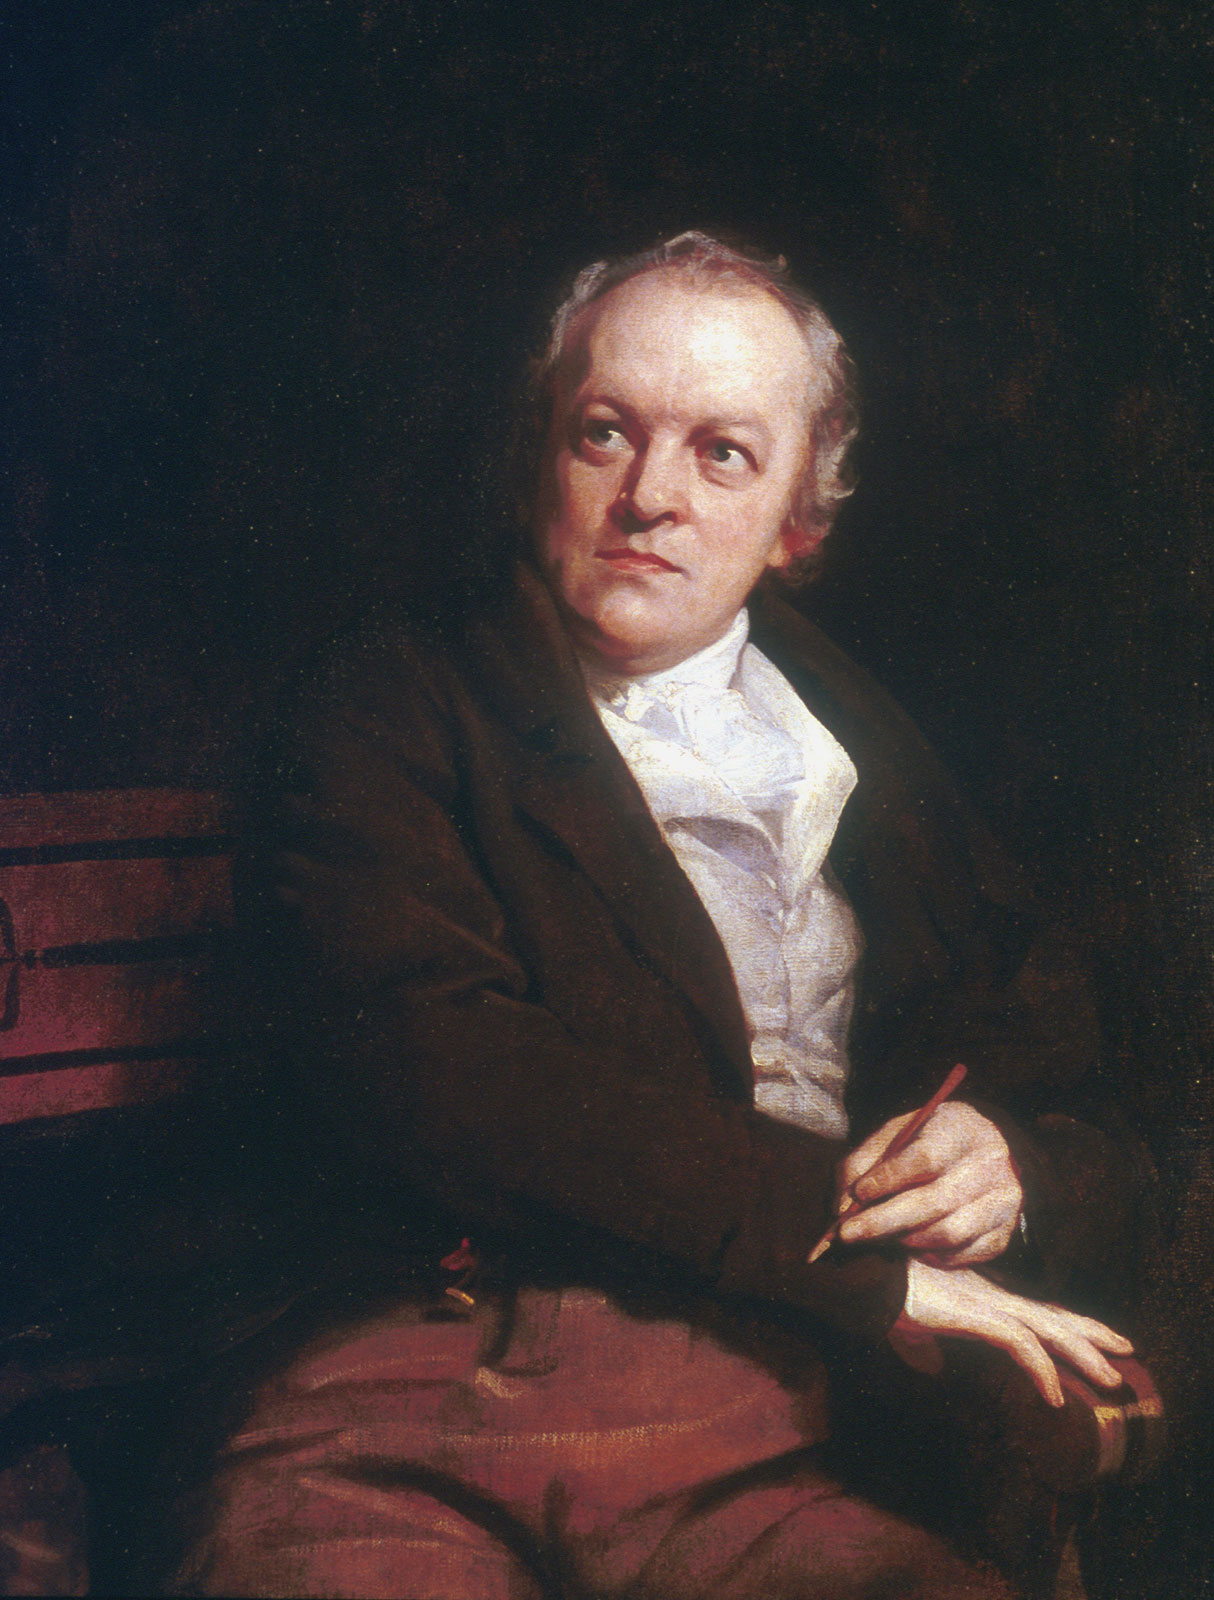 William-Blake-óleo-tela-Thomas-Phillips-National-1807